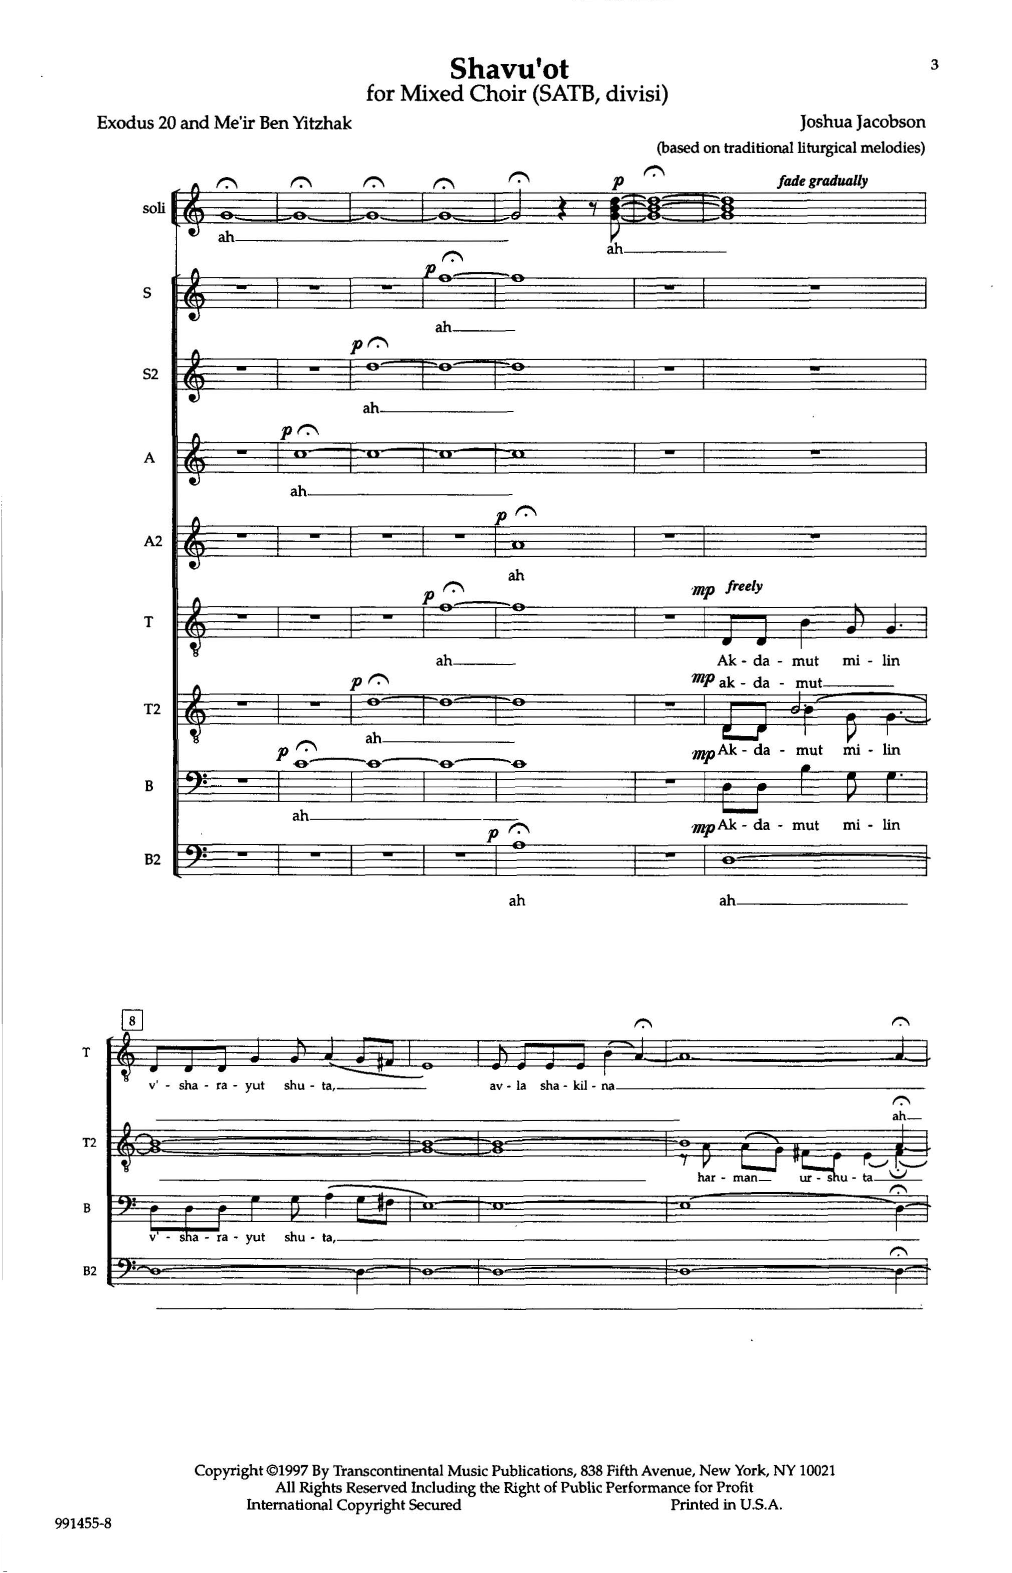 Joshua Jacobson Shavu'ot sheet music notes and chords arranged for SATB Choir